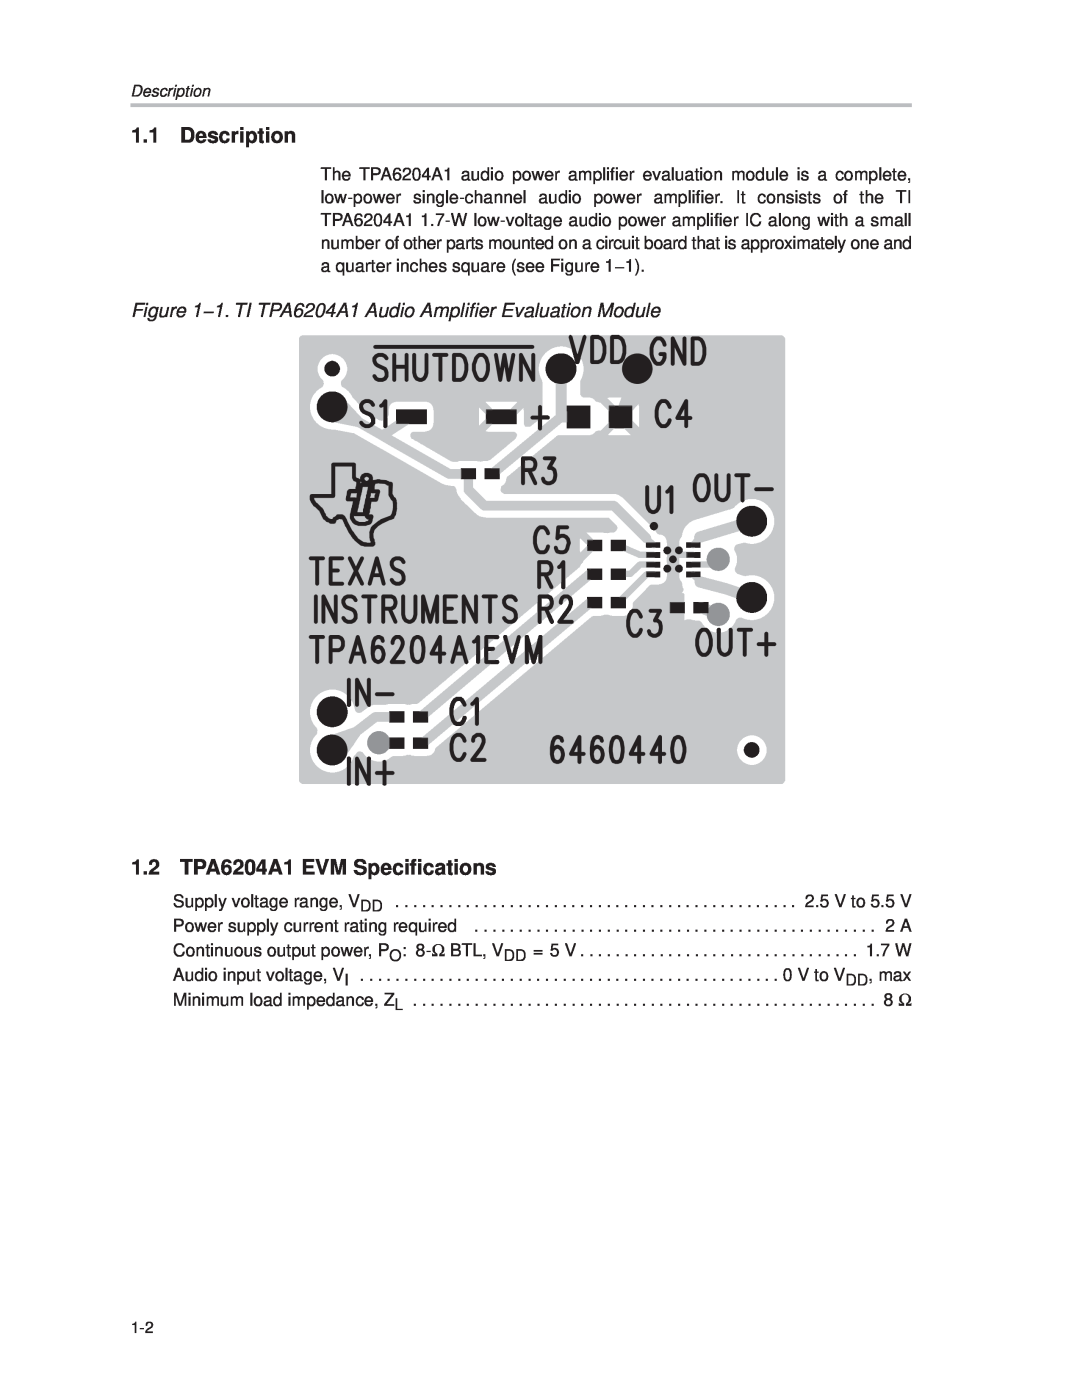 Texas Instruments manual Description, 1.2 TPA6204A1 EVM Specifications 